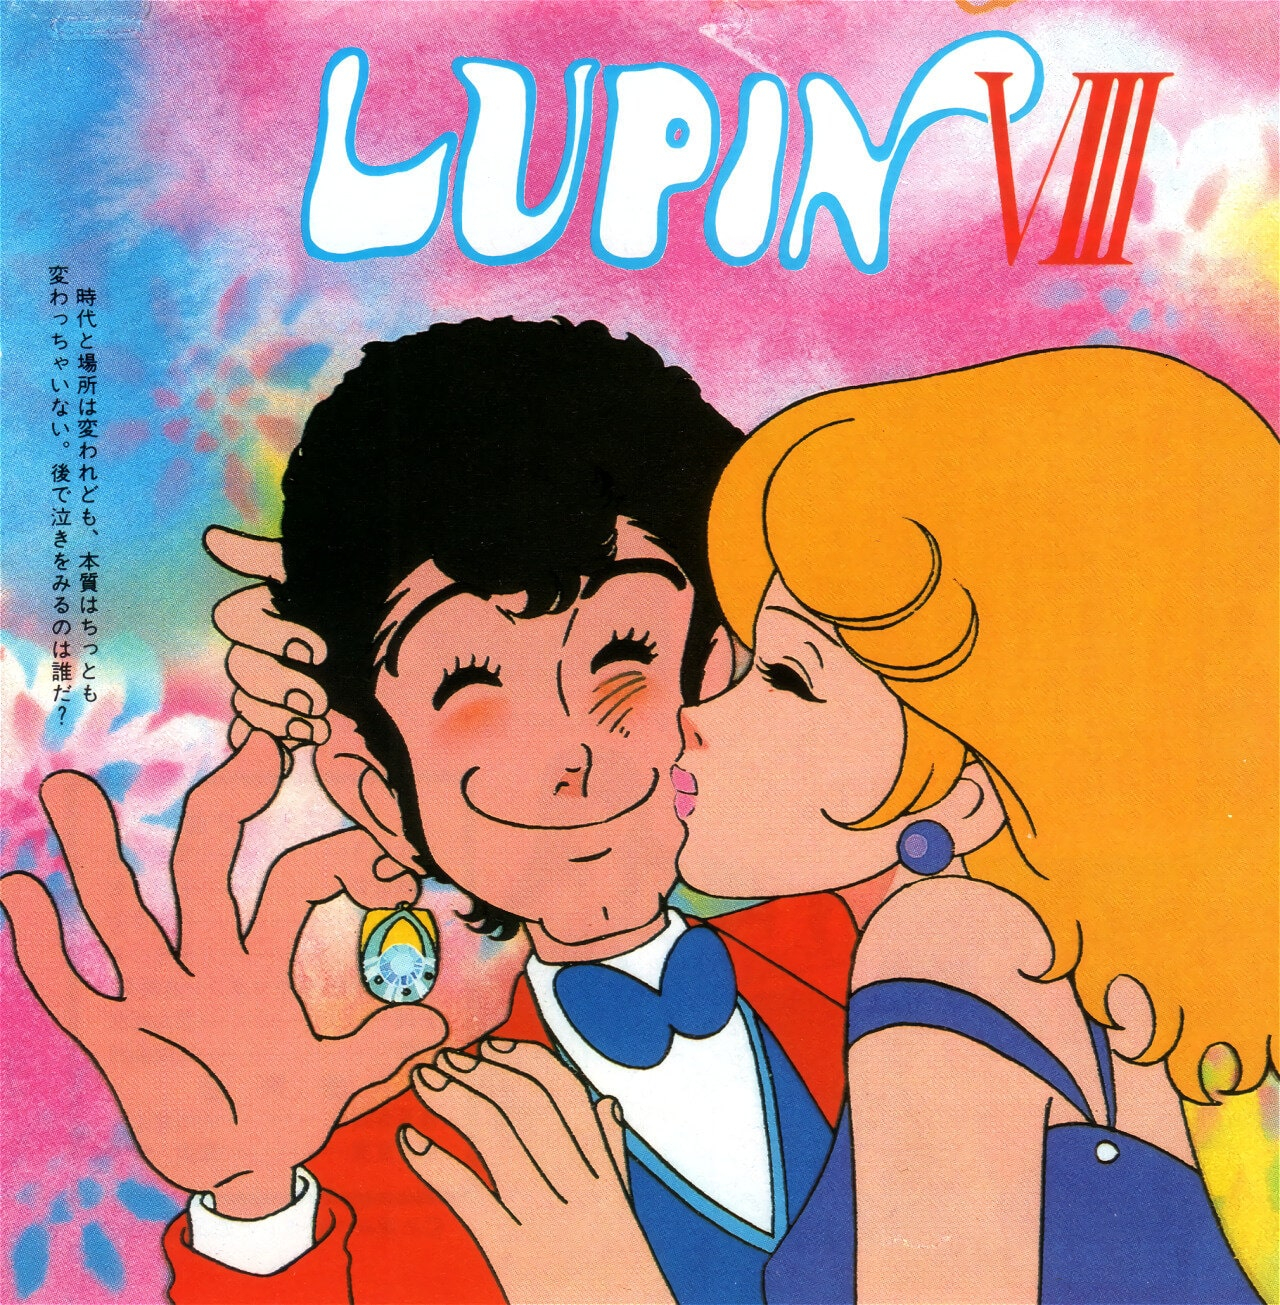 Lupin_VIII_Cover-min.jpg